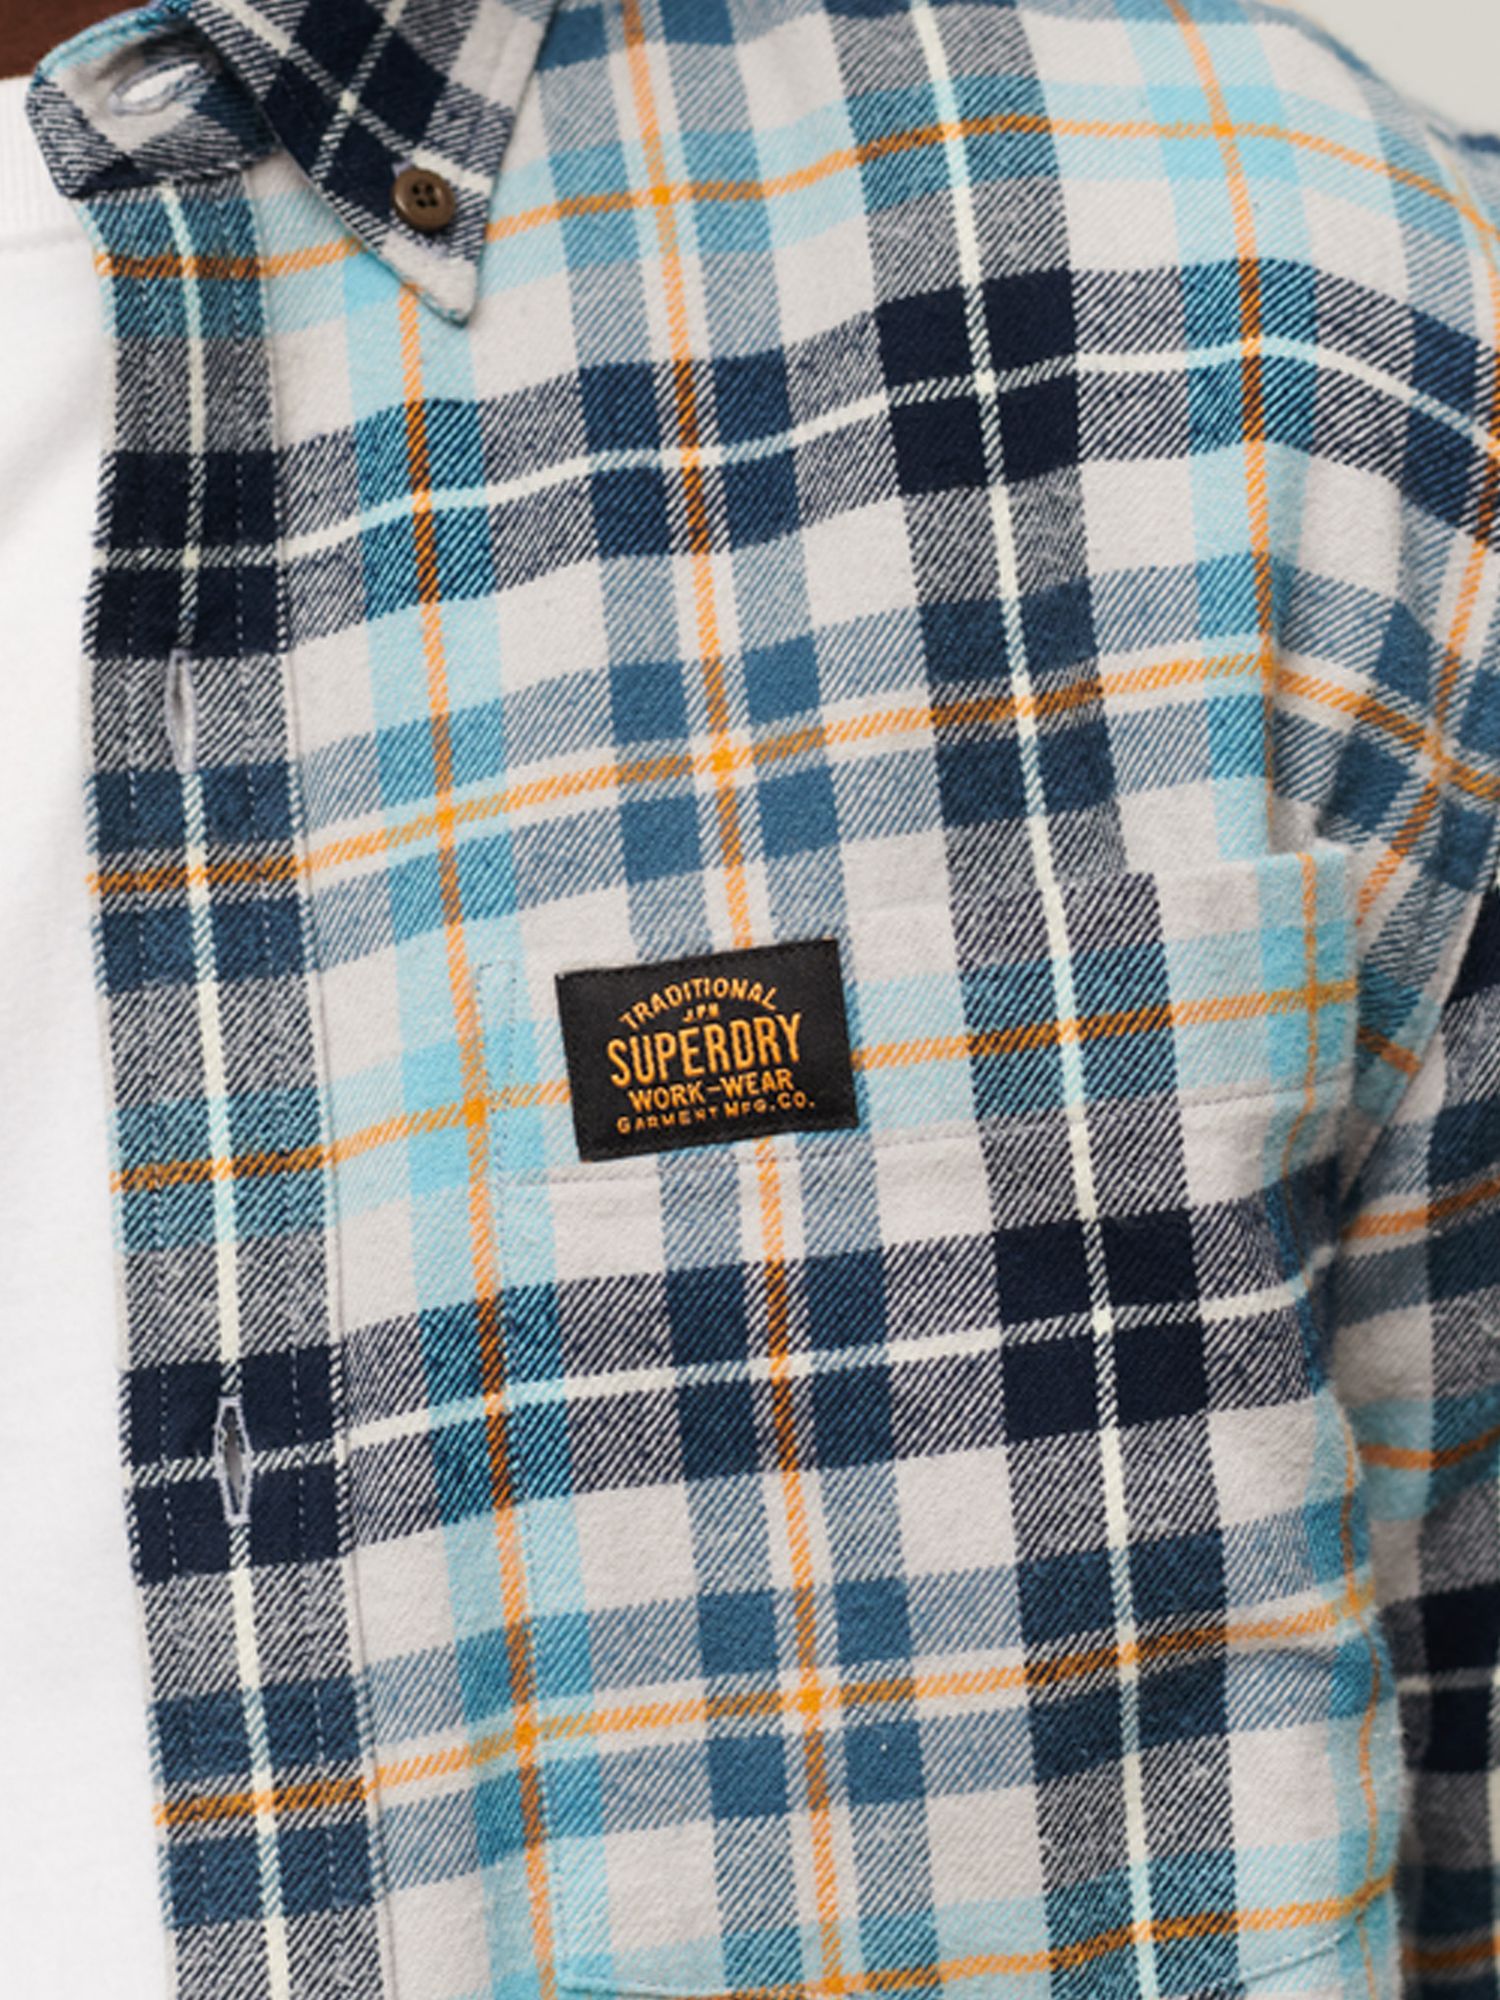 Superdry Organic Cotton Long Sleeve Lumberjack Shirt, Canyon Check Grey, S